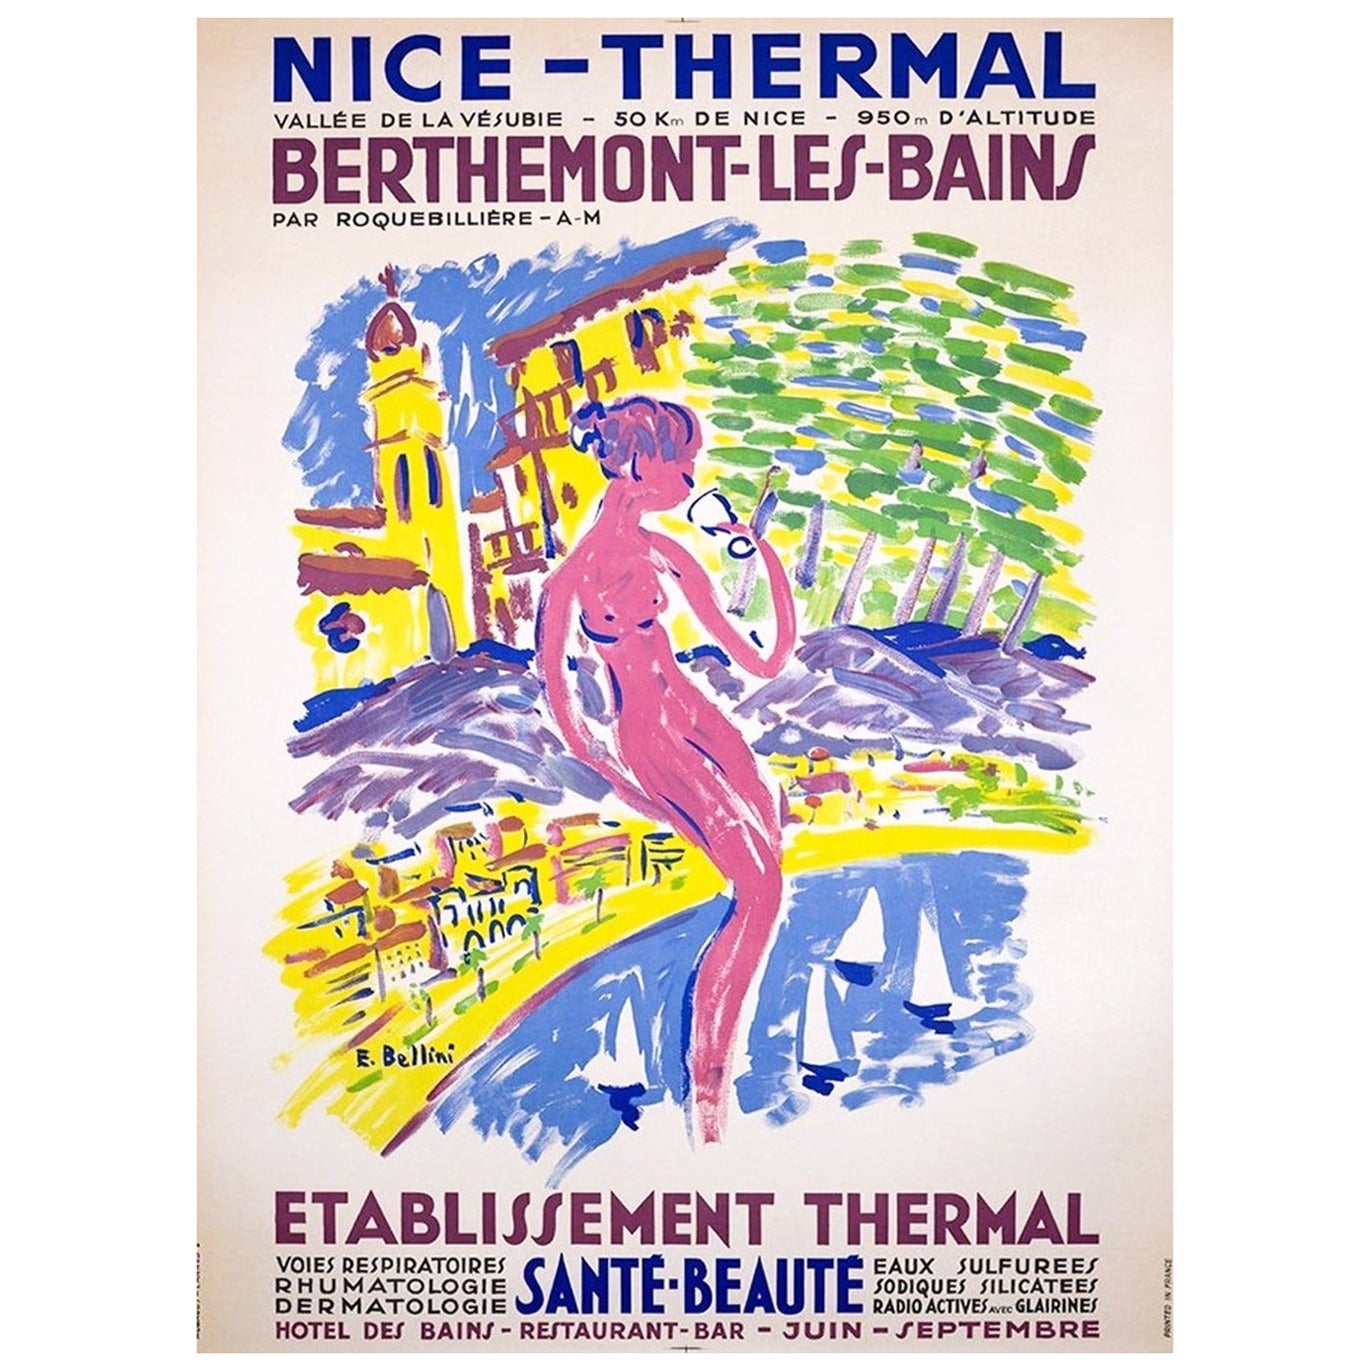 1960 Nice - Thermal Berthemont-les-bains Original Vintage-Poster